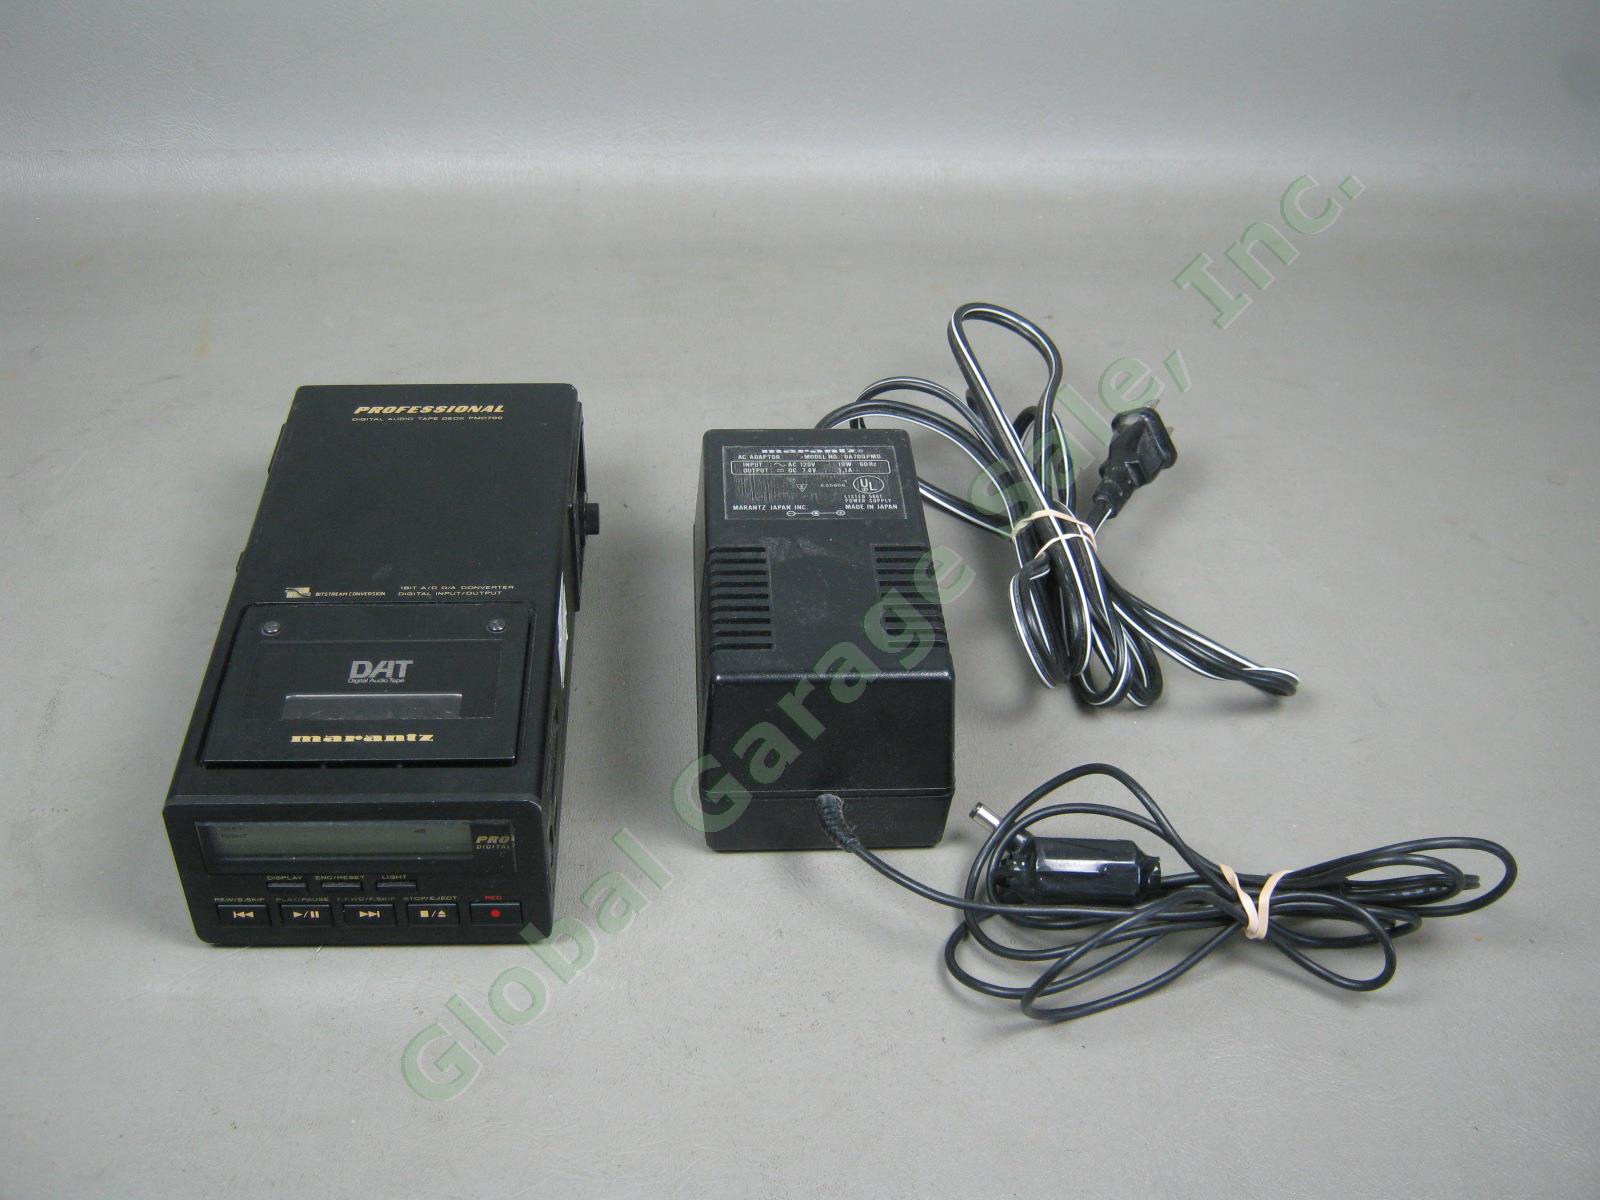 Marantz PMD700 Professional DAT Digital Audio Tape Deck Recorder +AC Adapter Lot